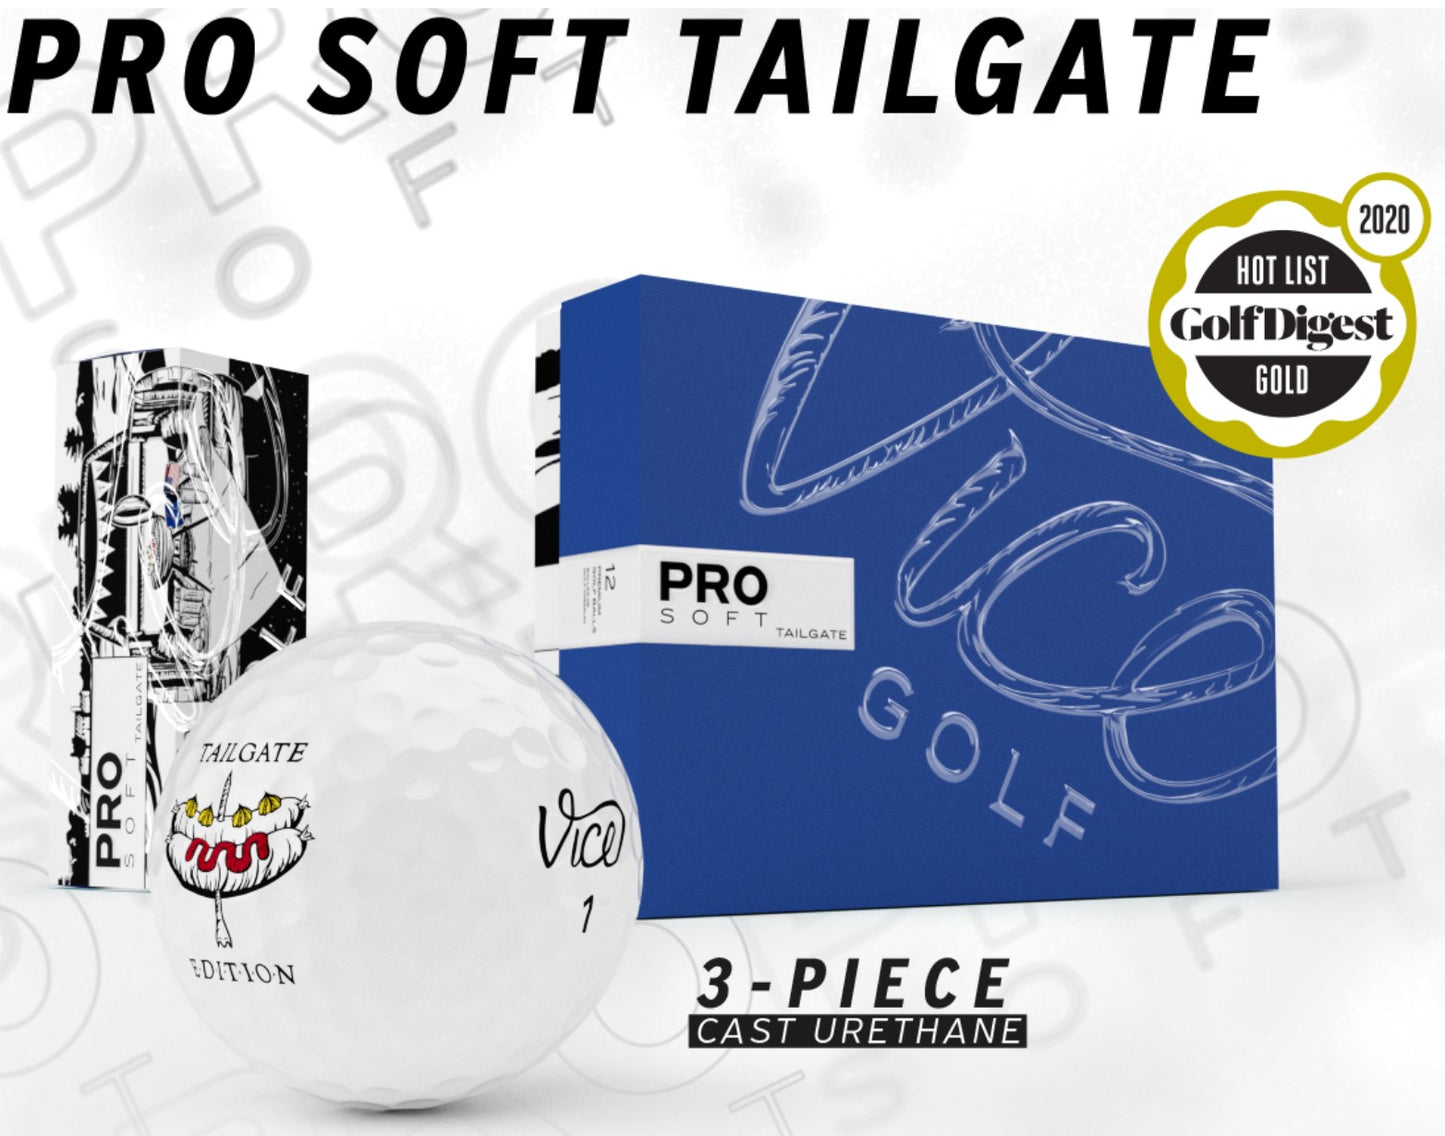 Vice Pro Soft Golf Balls - Tailgate Edition